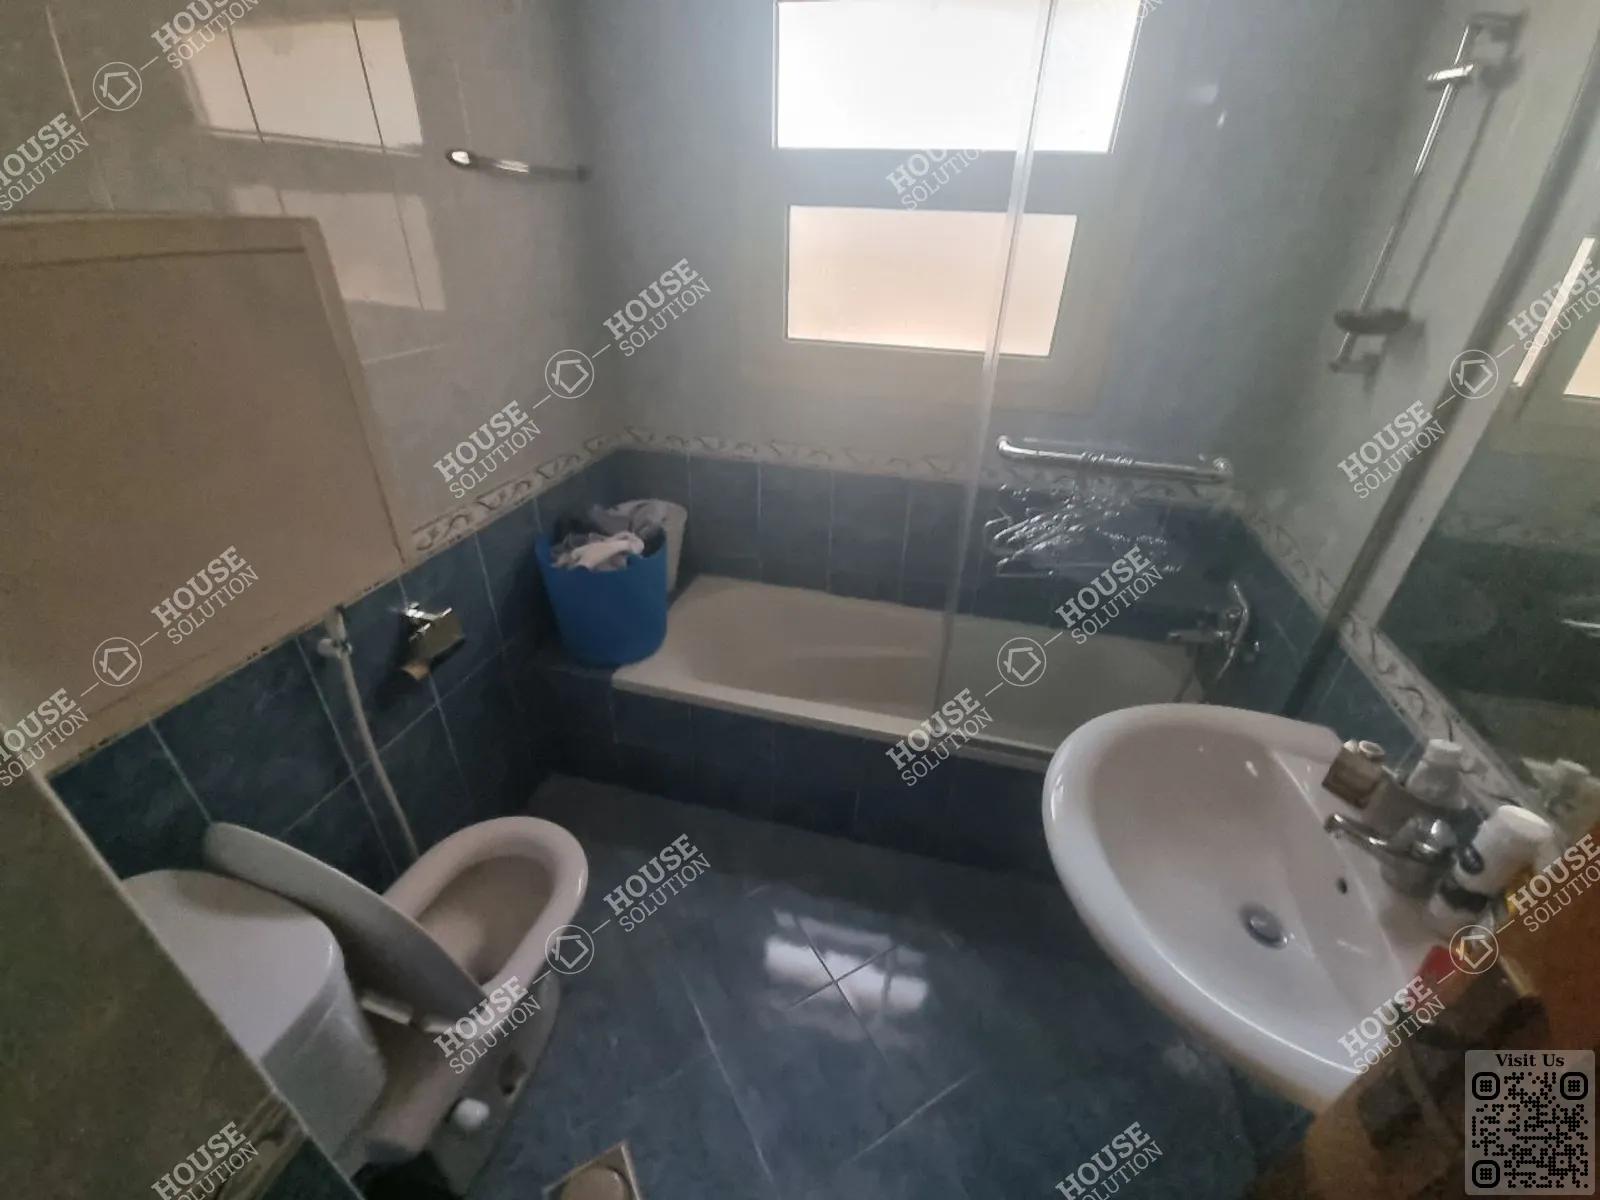 BATHROOM  @ Apartments For Rent In Maadi Maadi Sarayat Area: 350 m² consists of 4 Bedrooms 4 Bathrooms Modern furnished 5 stars #3142-2